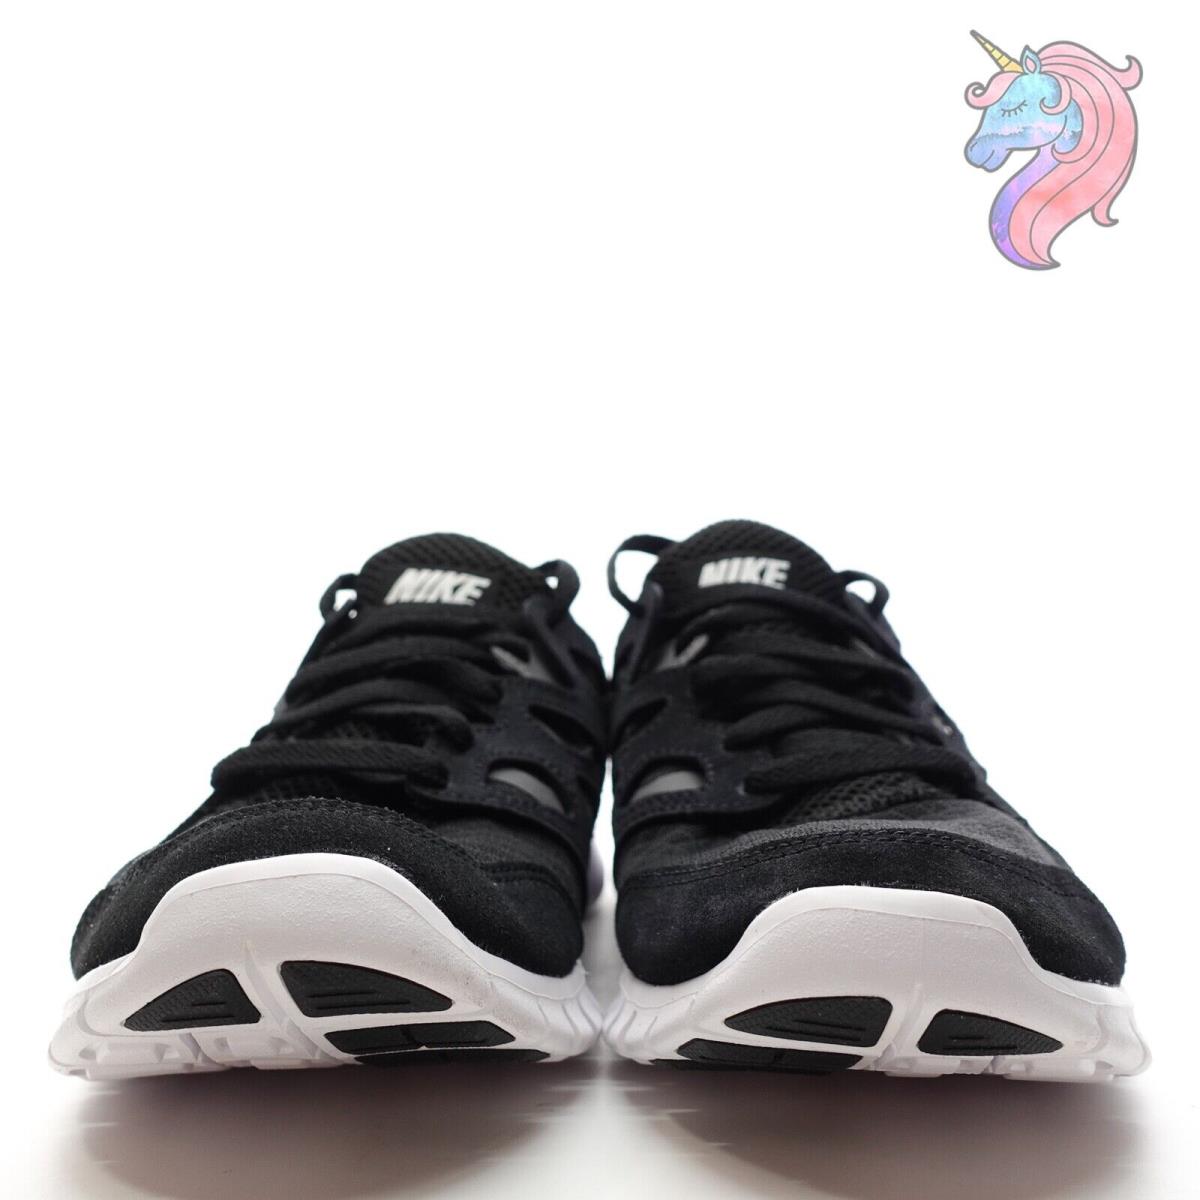 Nike shoes Free Run - Black, White 3